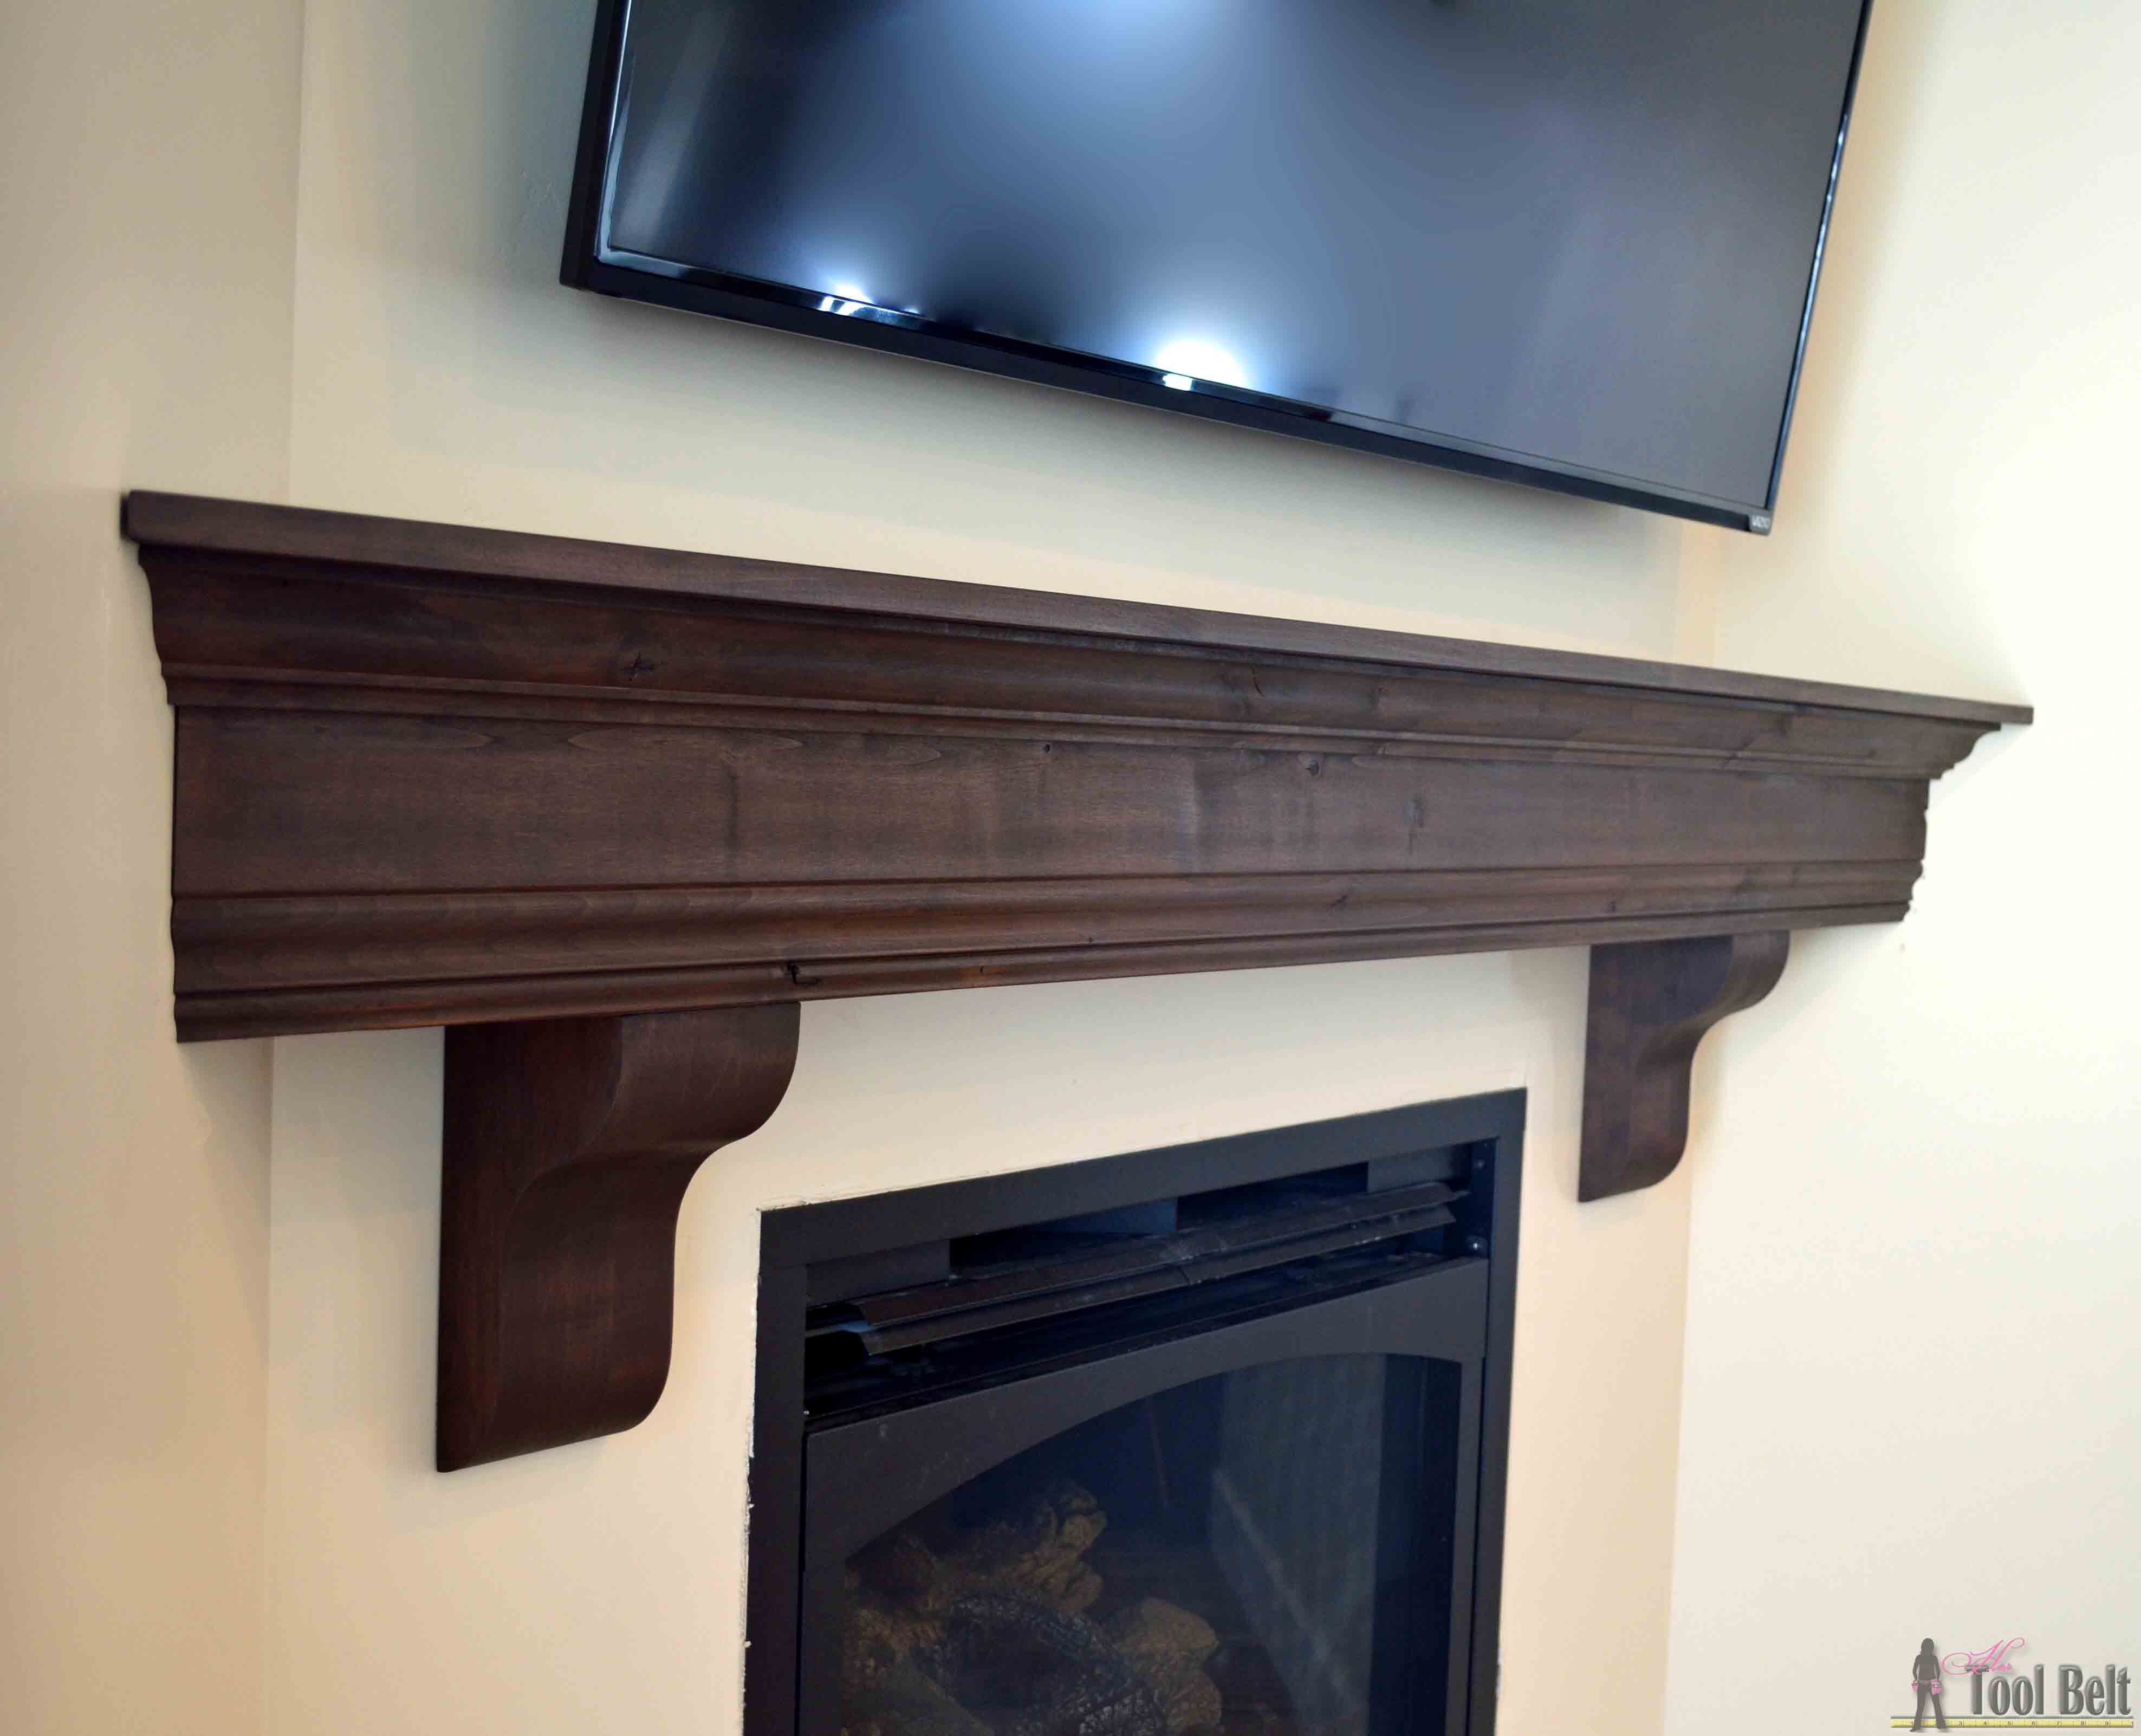 Best ideas about Fireplace Mantel Shelf
. Save or Pin DIY Fireplace Mantel Shelf Her Tool Belt Now.